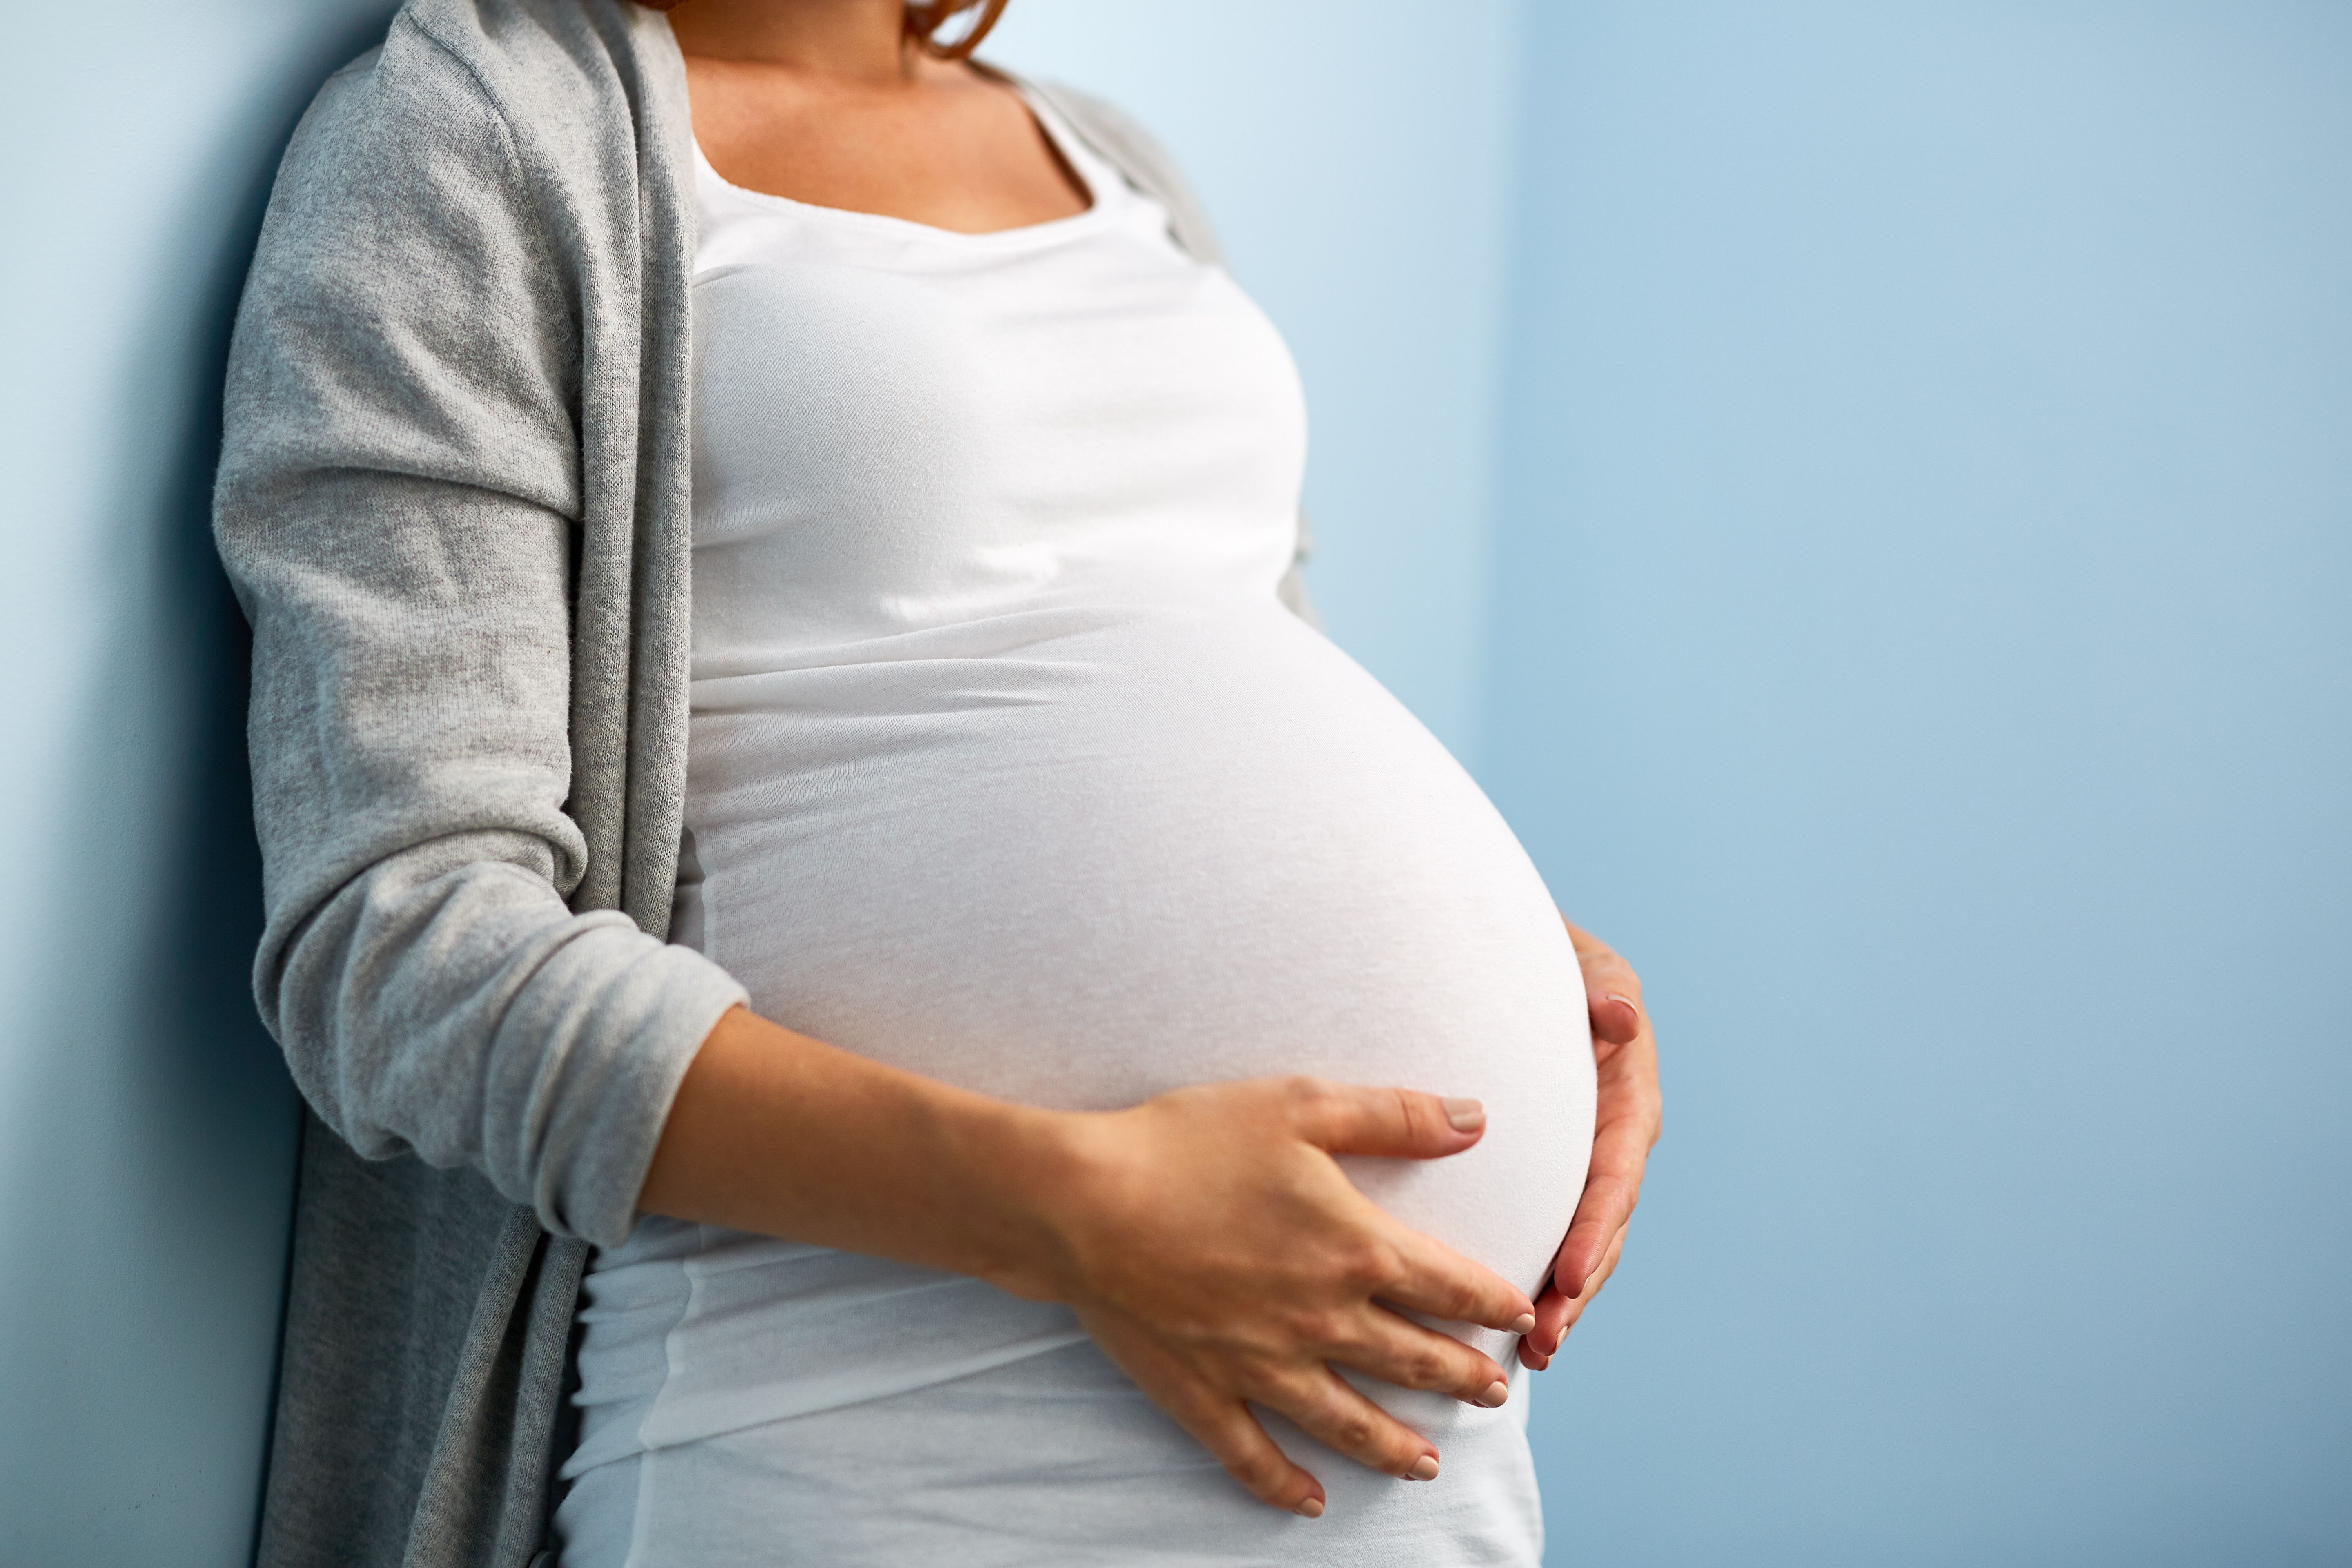 Pregnant woman holding stomach | Image Credit: pressmaster - stock.adobe.com